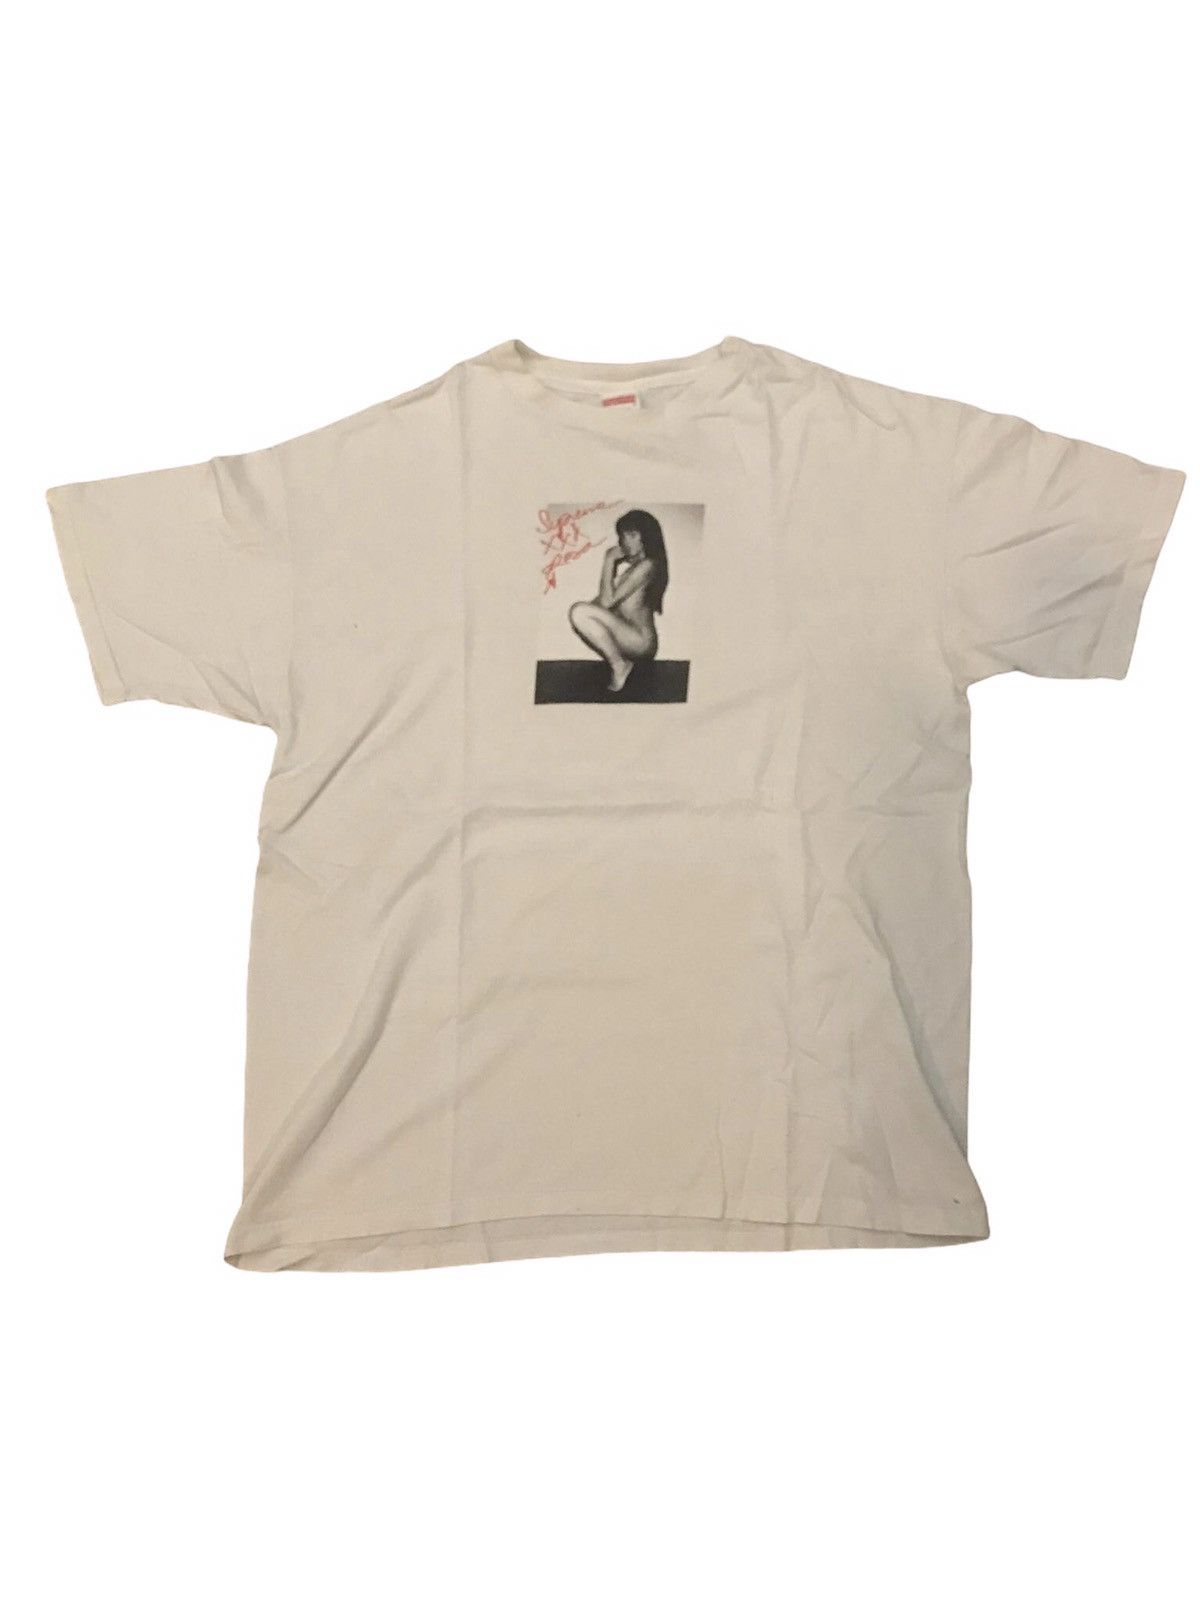 Terry Richardson Supreme T Shirt | Grailed